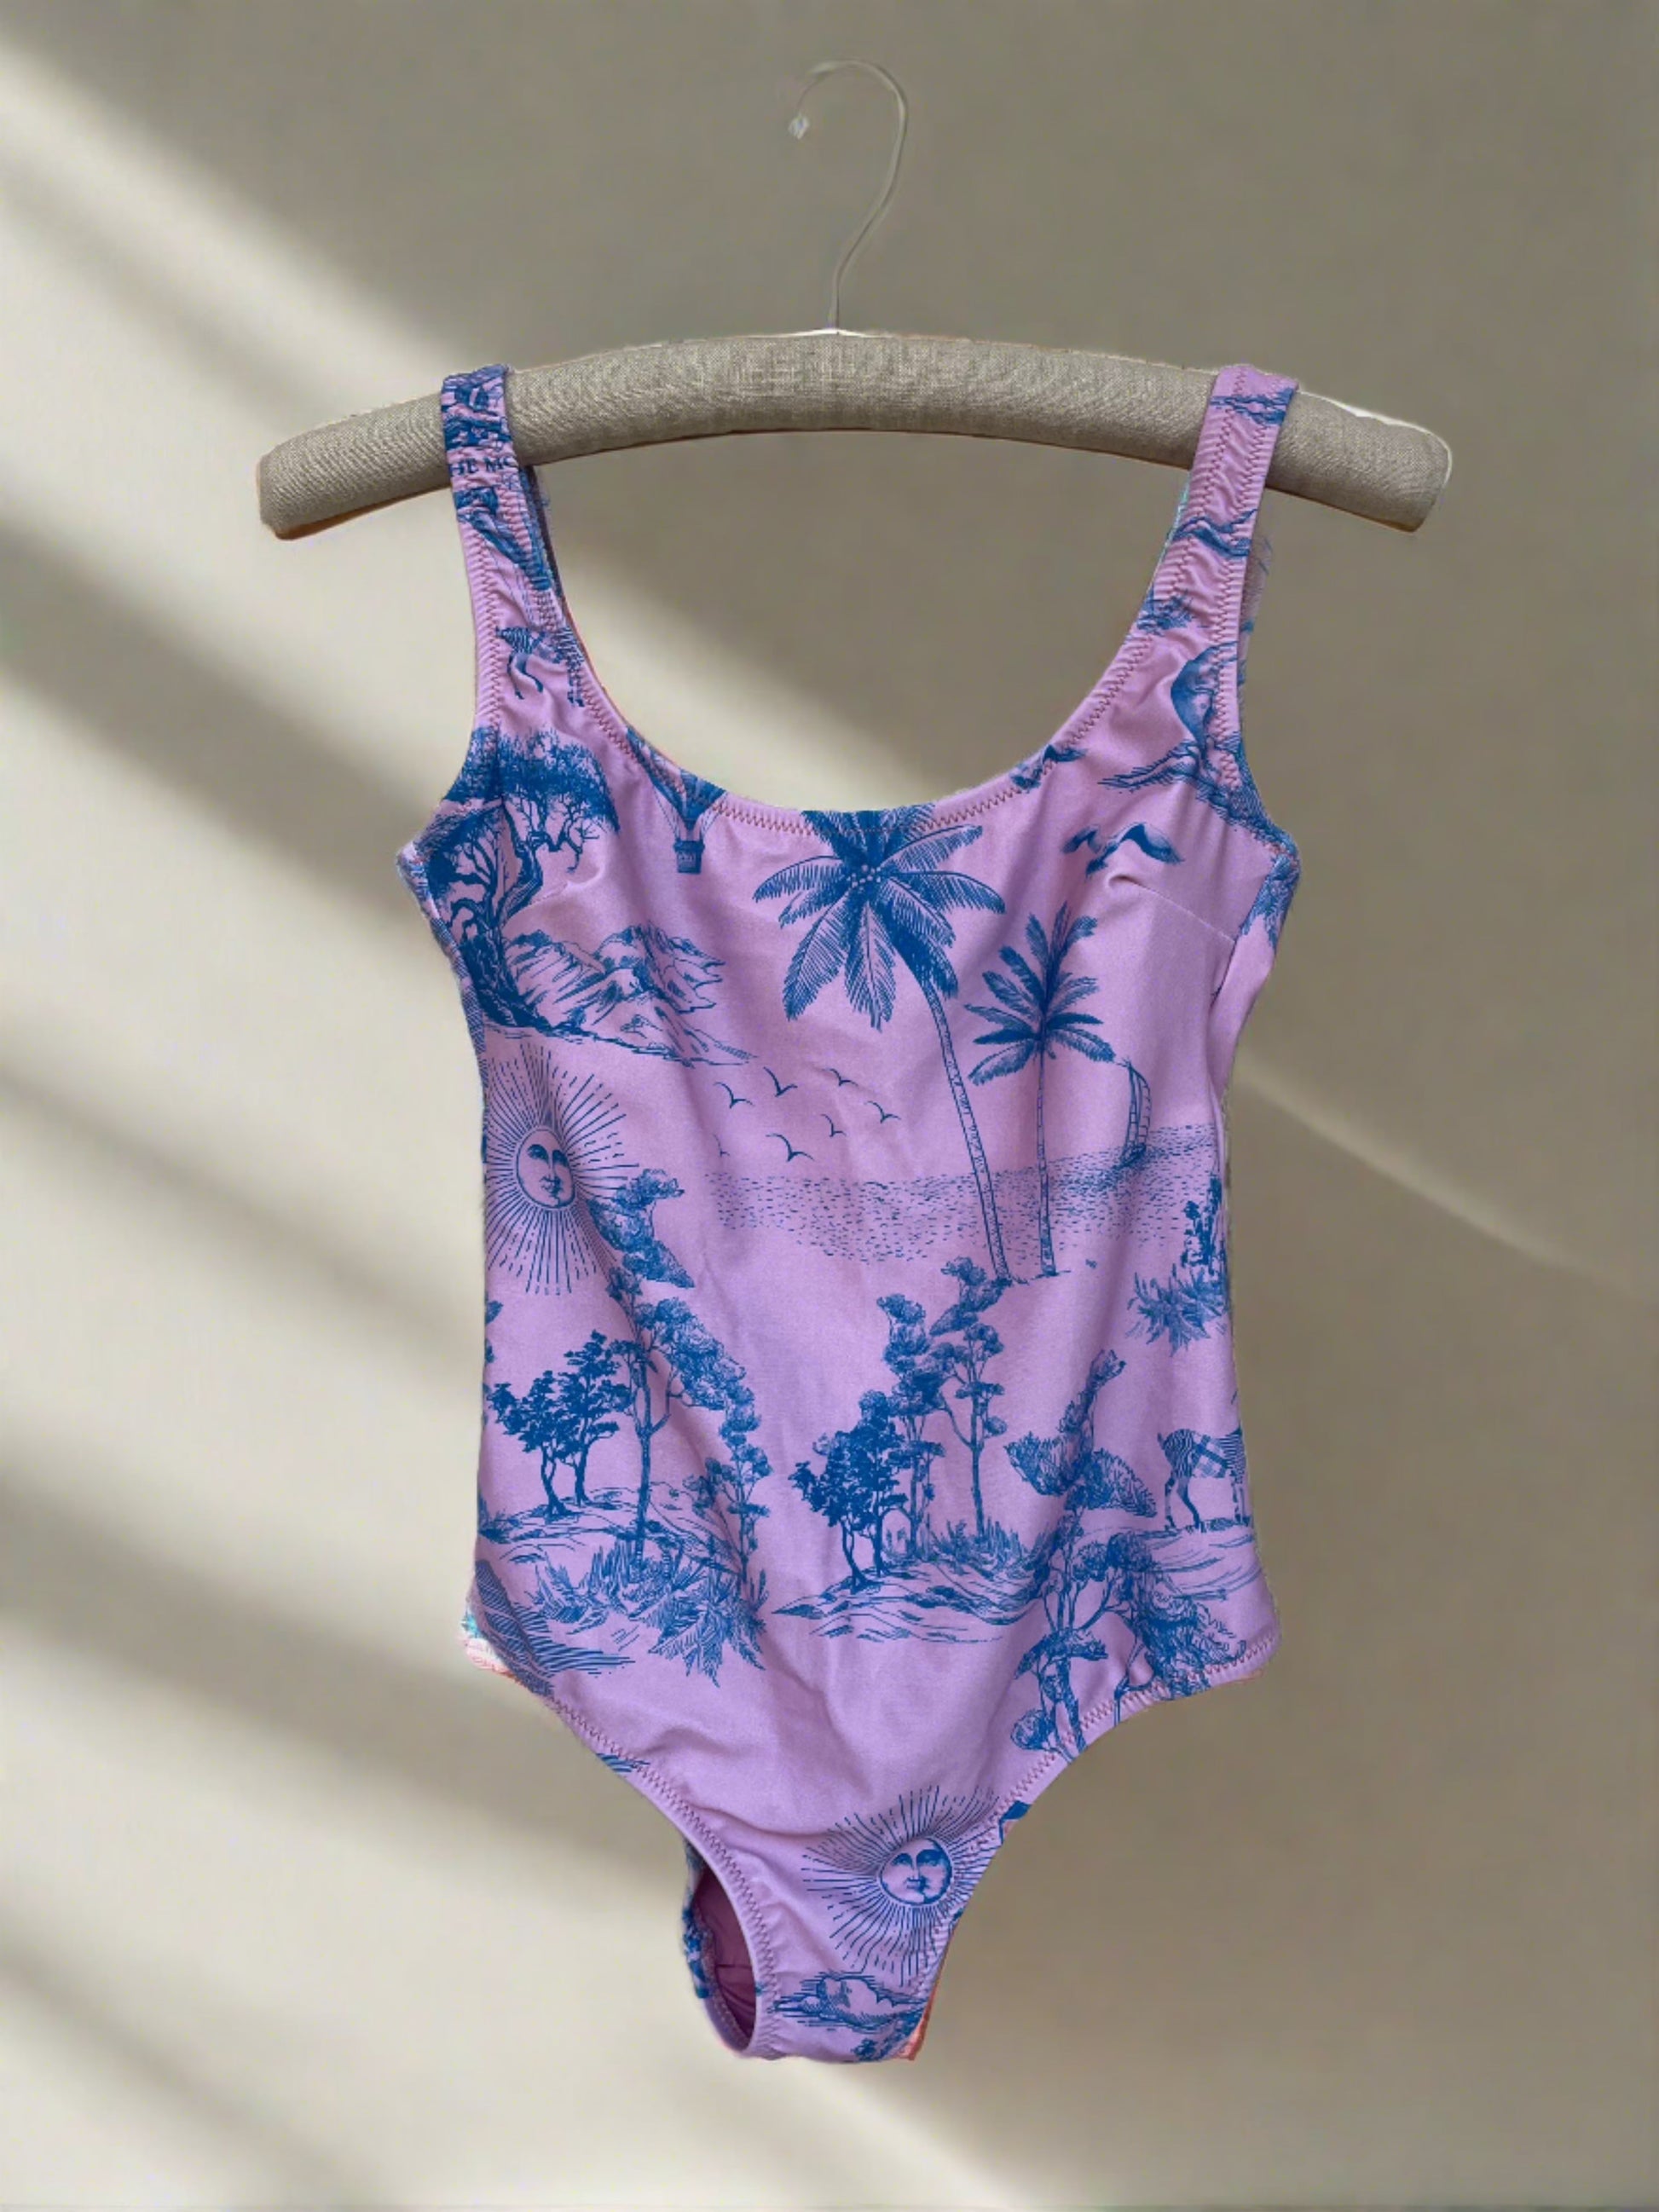 printed swimsuit on hanger